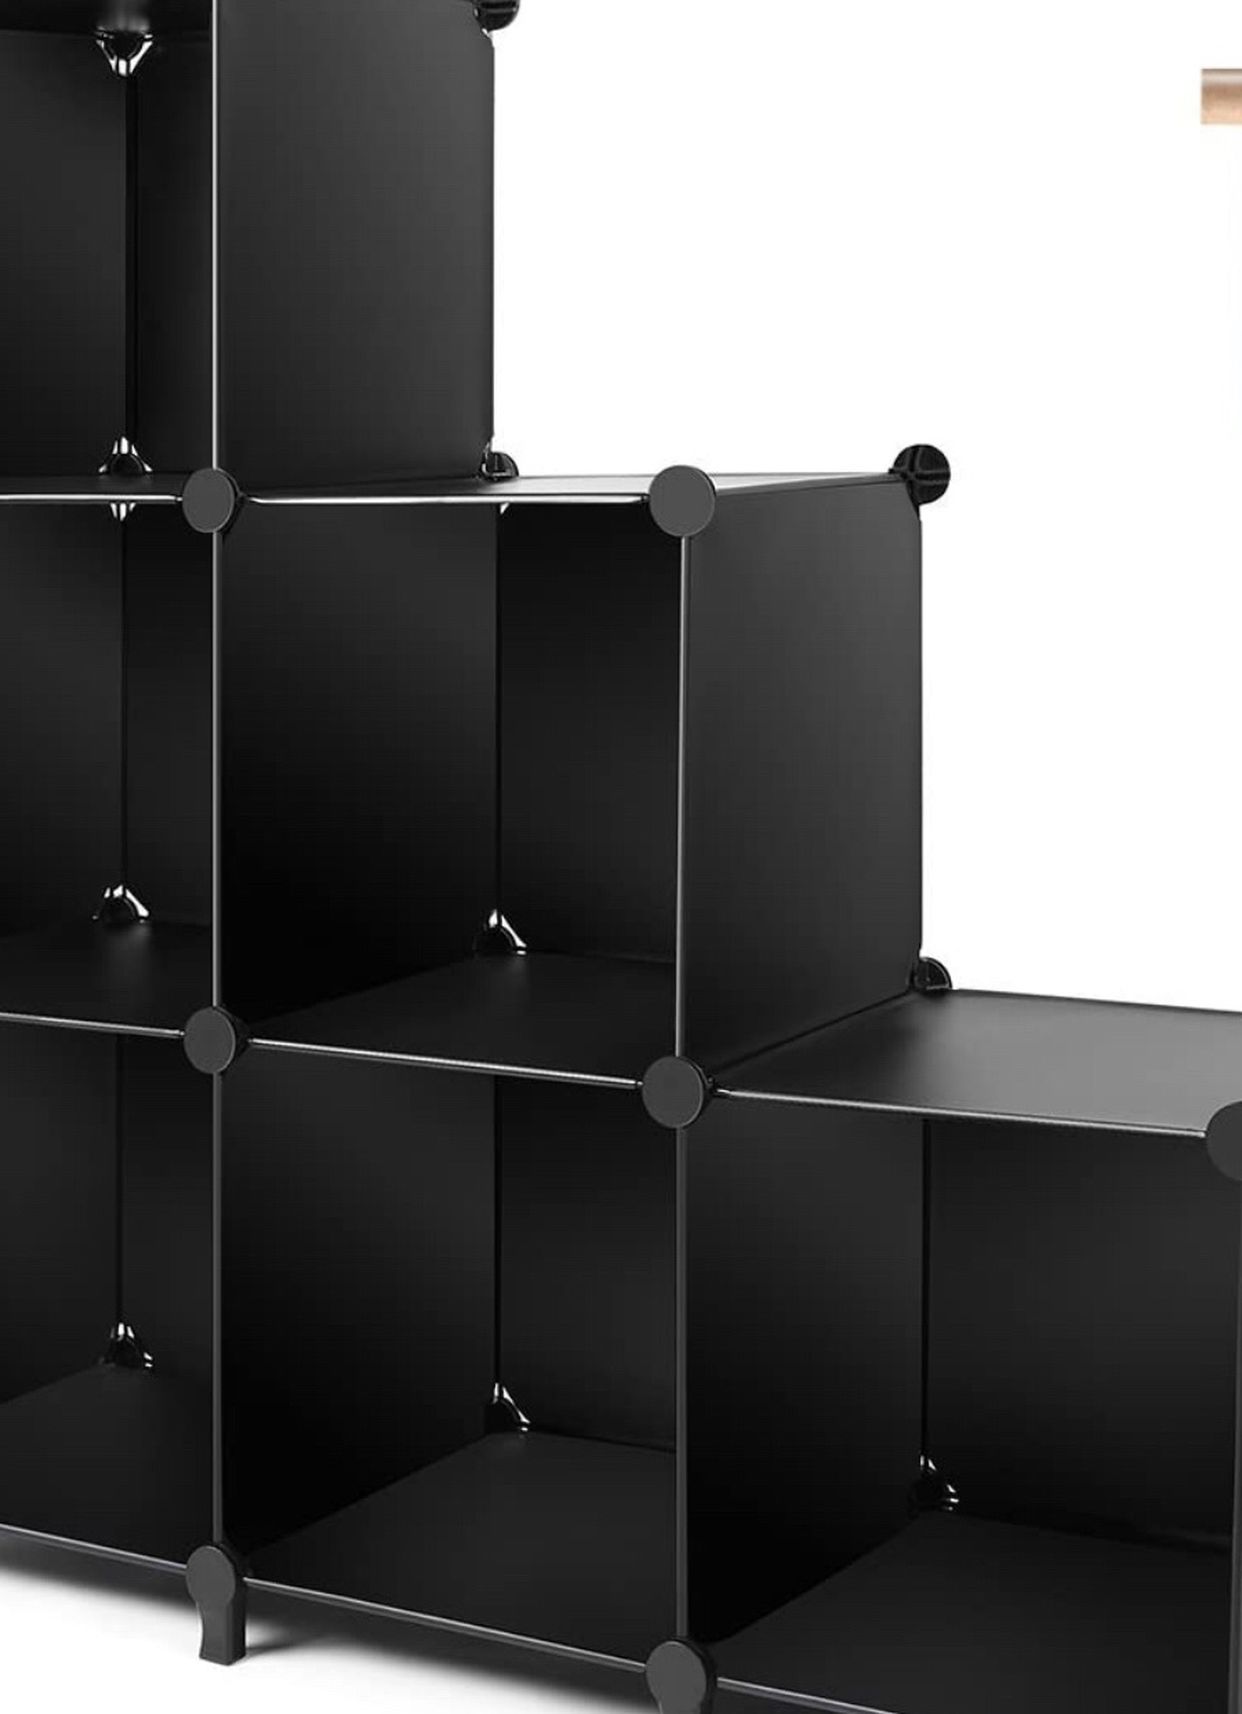 TomCare Cube Storage 6-Cube Closet Organizer Storage Shelves Cubes Organizer DIY Plastic Closet Cabinet Modular Book Shelf Organizing Storage Shelving